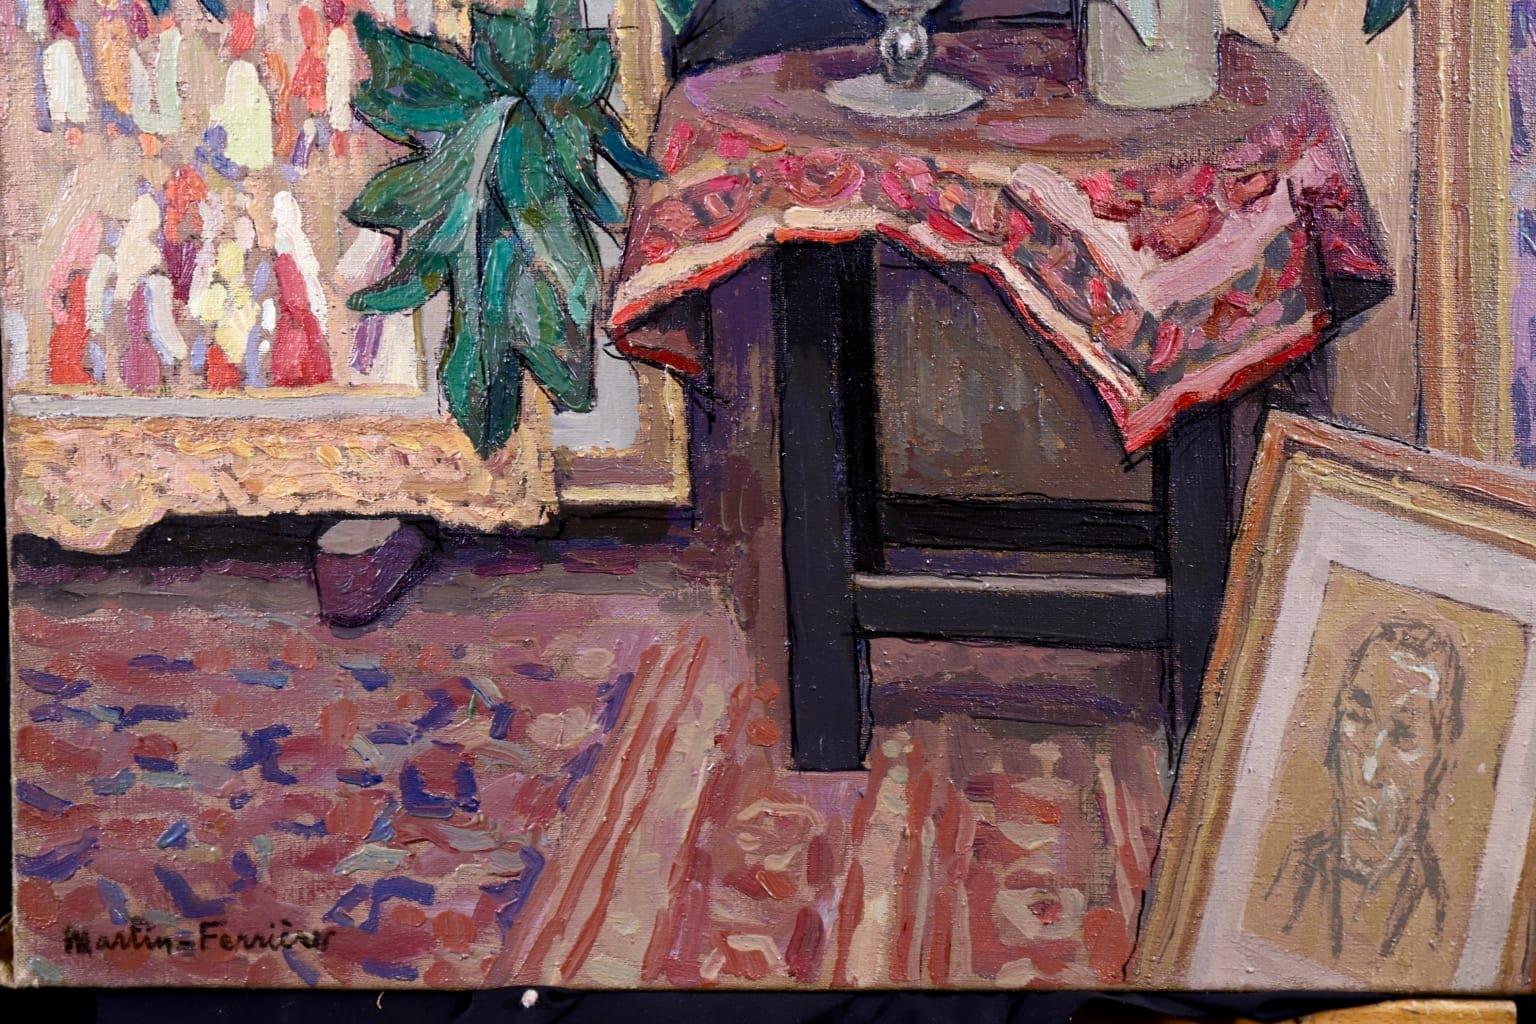 Artist's Studio - Post Impressionist Oil, Interior by Jacques Martin-Ferrieres - Post-Impressionist Painting by Jacques Martin-Ferrières